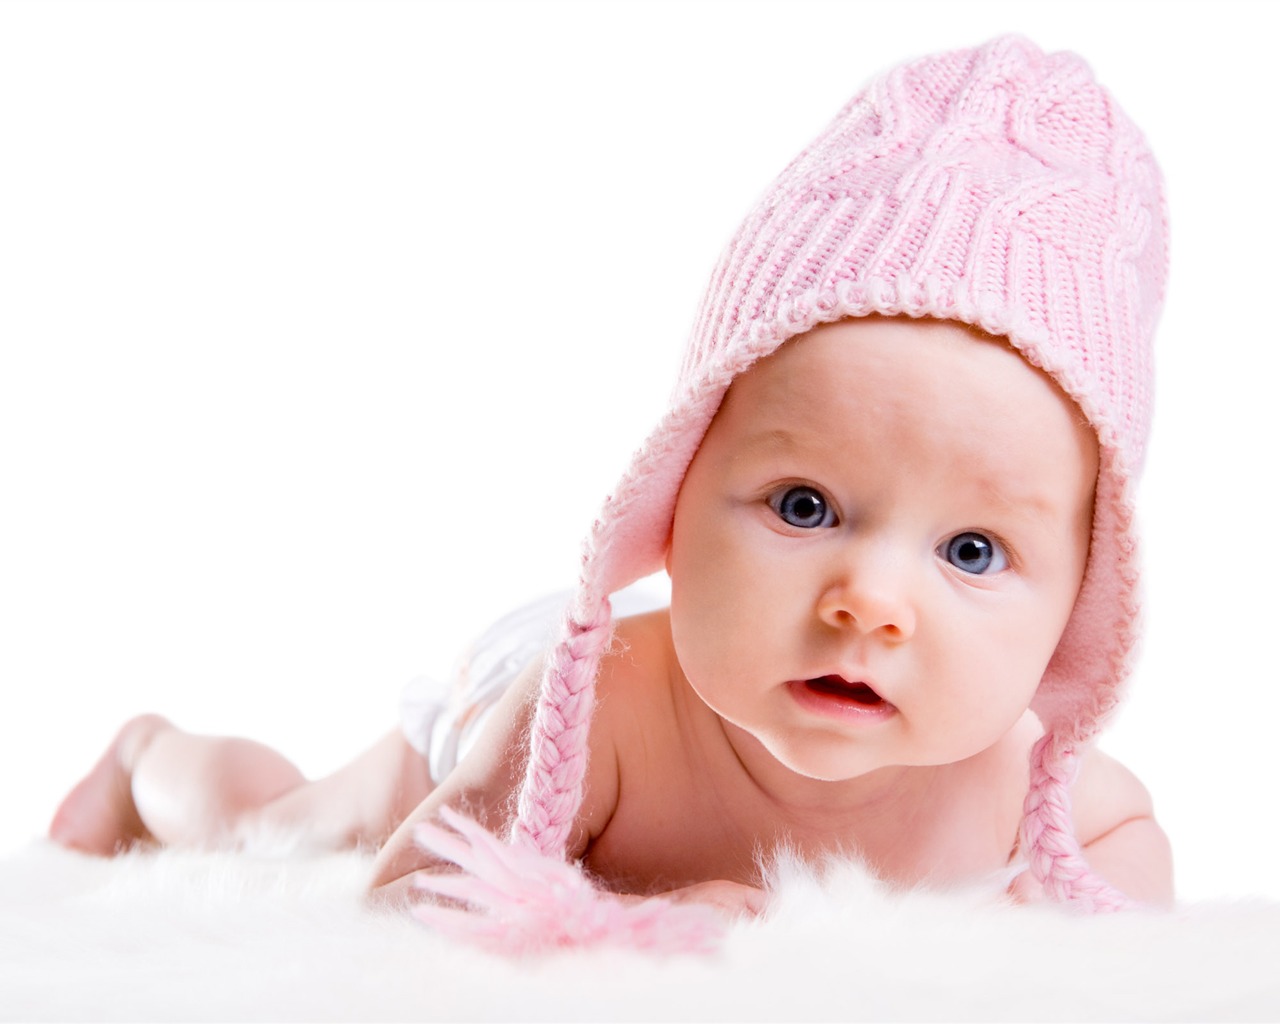 Fonds d'écran mignon de bébé (4) #11 - 1280x1024